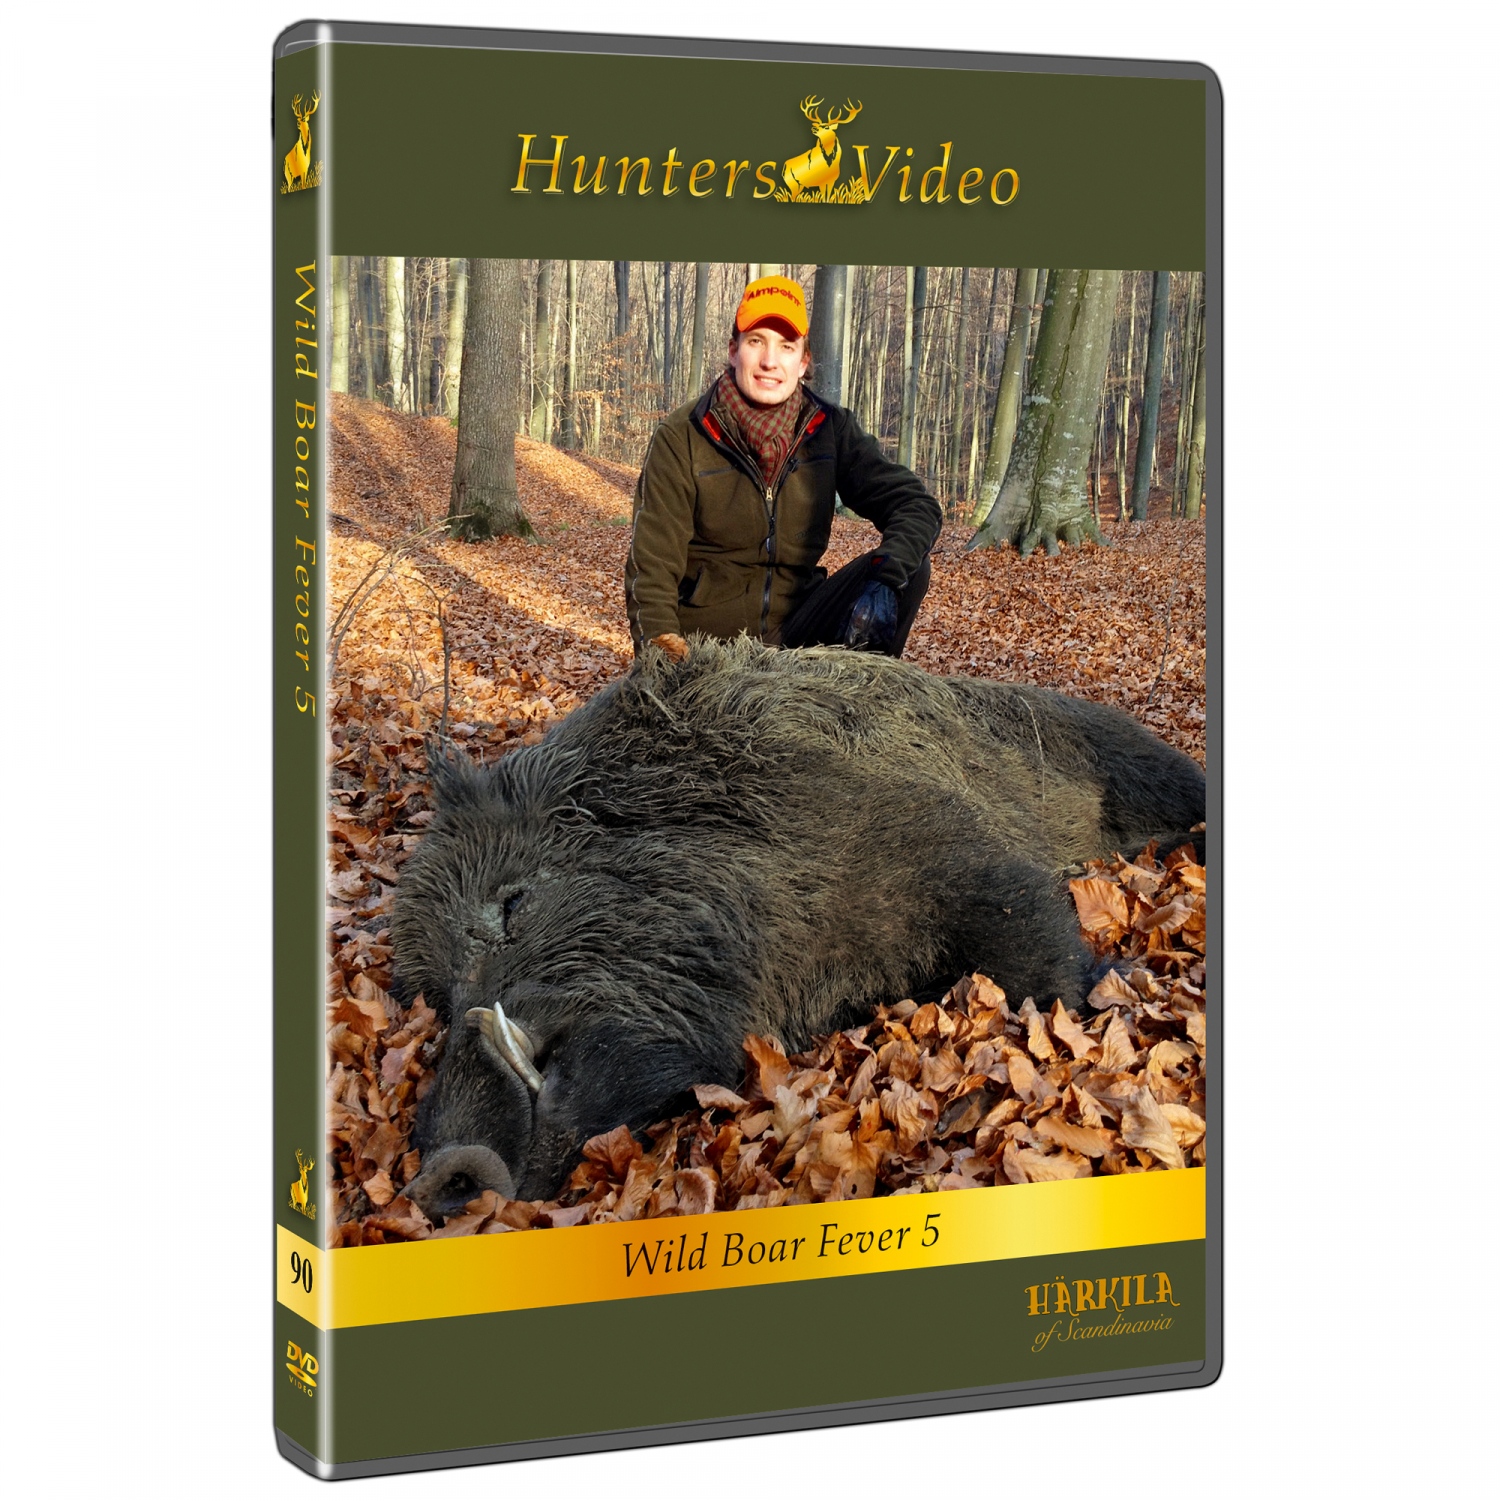 Hunters Video DVD Schwarzwildfieber 5 